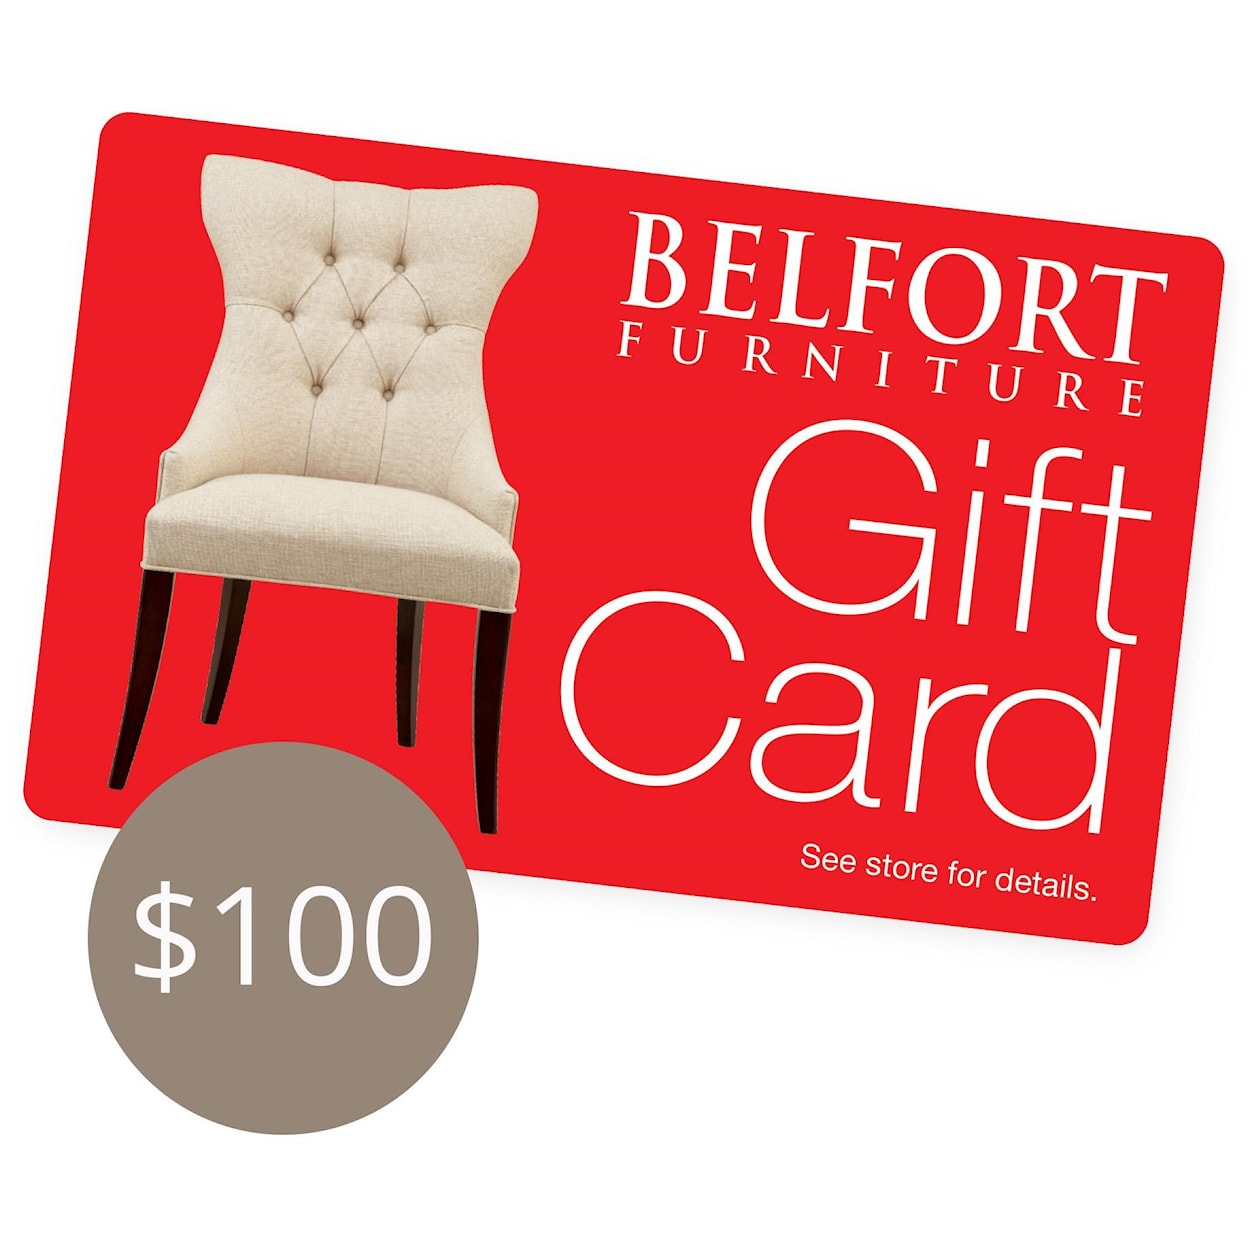 Belfort Furniture Gift Cards $100 Belfort Gift Card